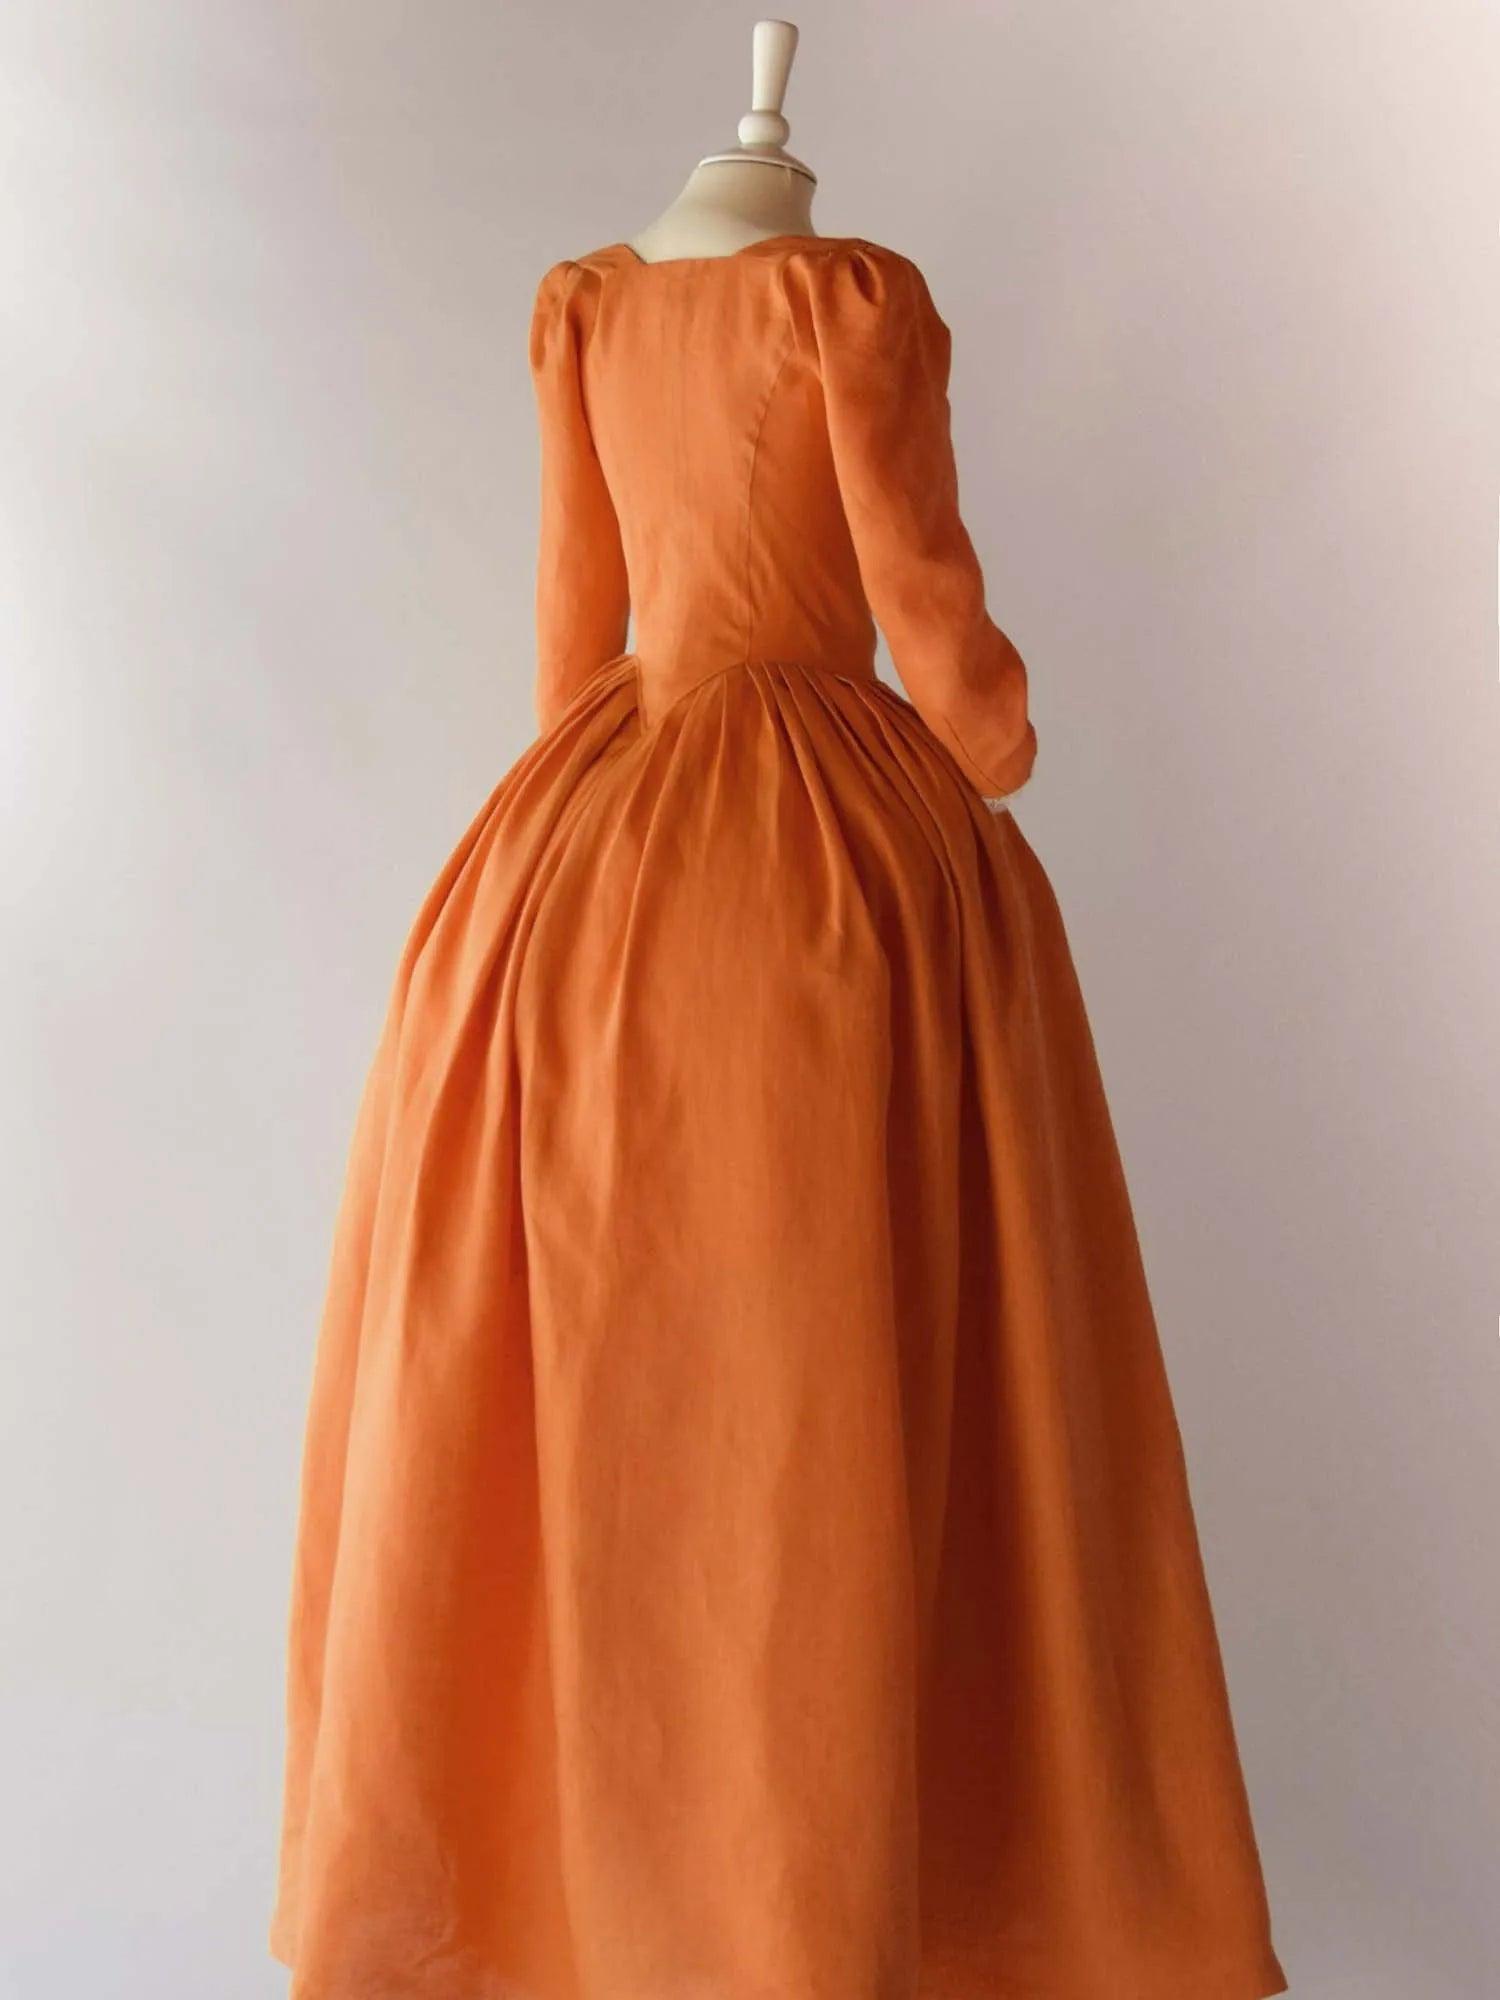 LOUISE, 18th-Century Dress in Apricot Linen - Atelier Serraspina